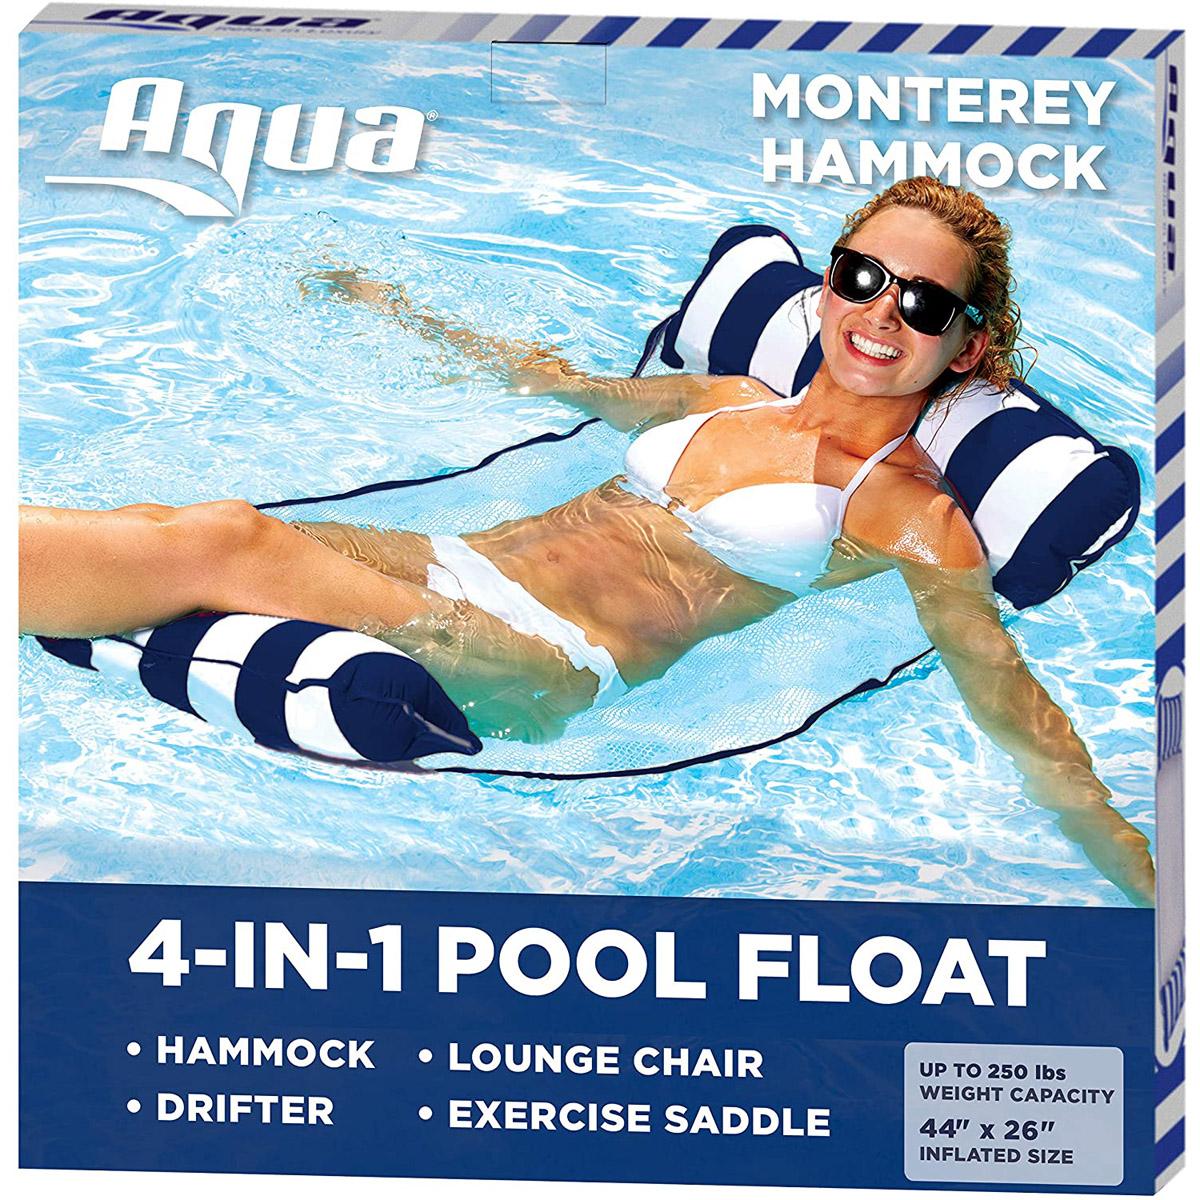 Aqua 4-in-1 Monterey Pool Hammock and Float for $10.99